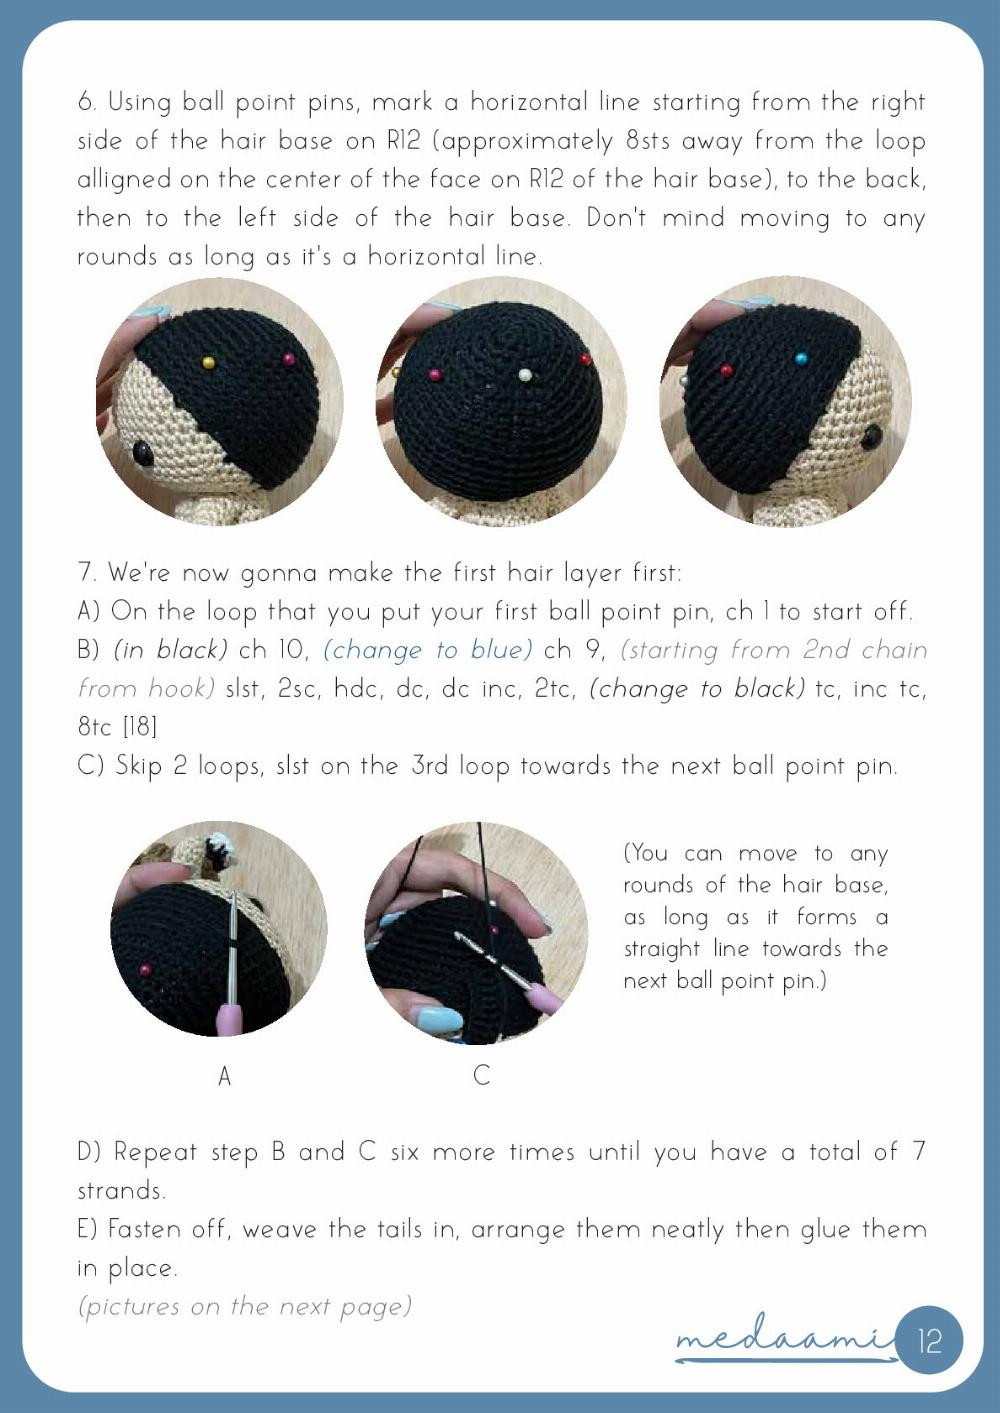 inosuke inspired crochet pattern